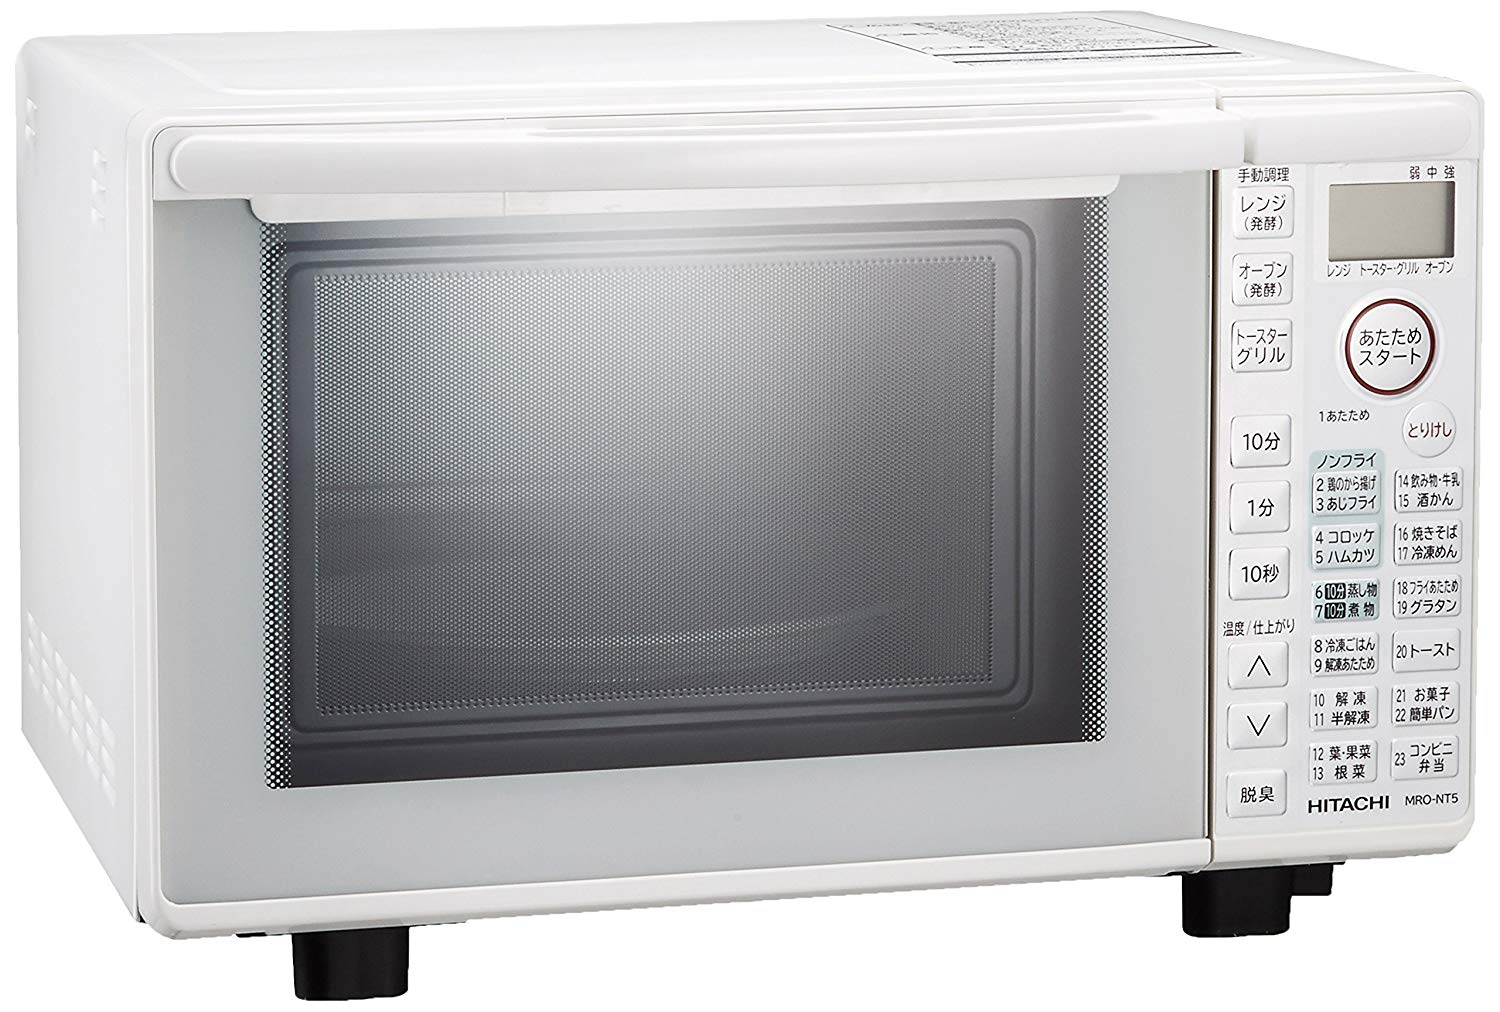 Hitachi microwave oven Pearl White MRO-NT5 W